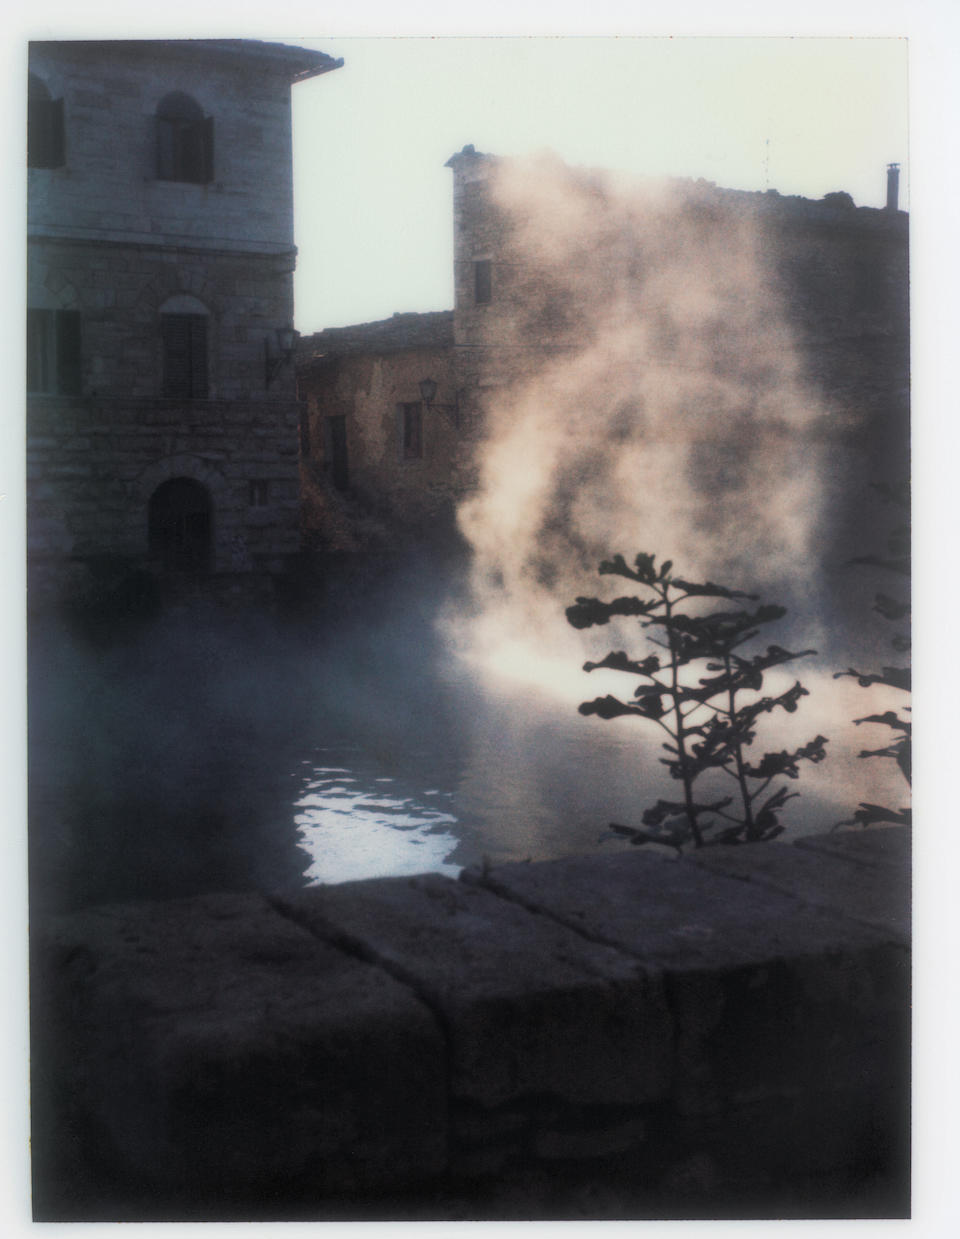 Andrey Tarkovsky (Russian, 1932-1986) A group of 10 Polaroid photographs